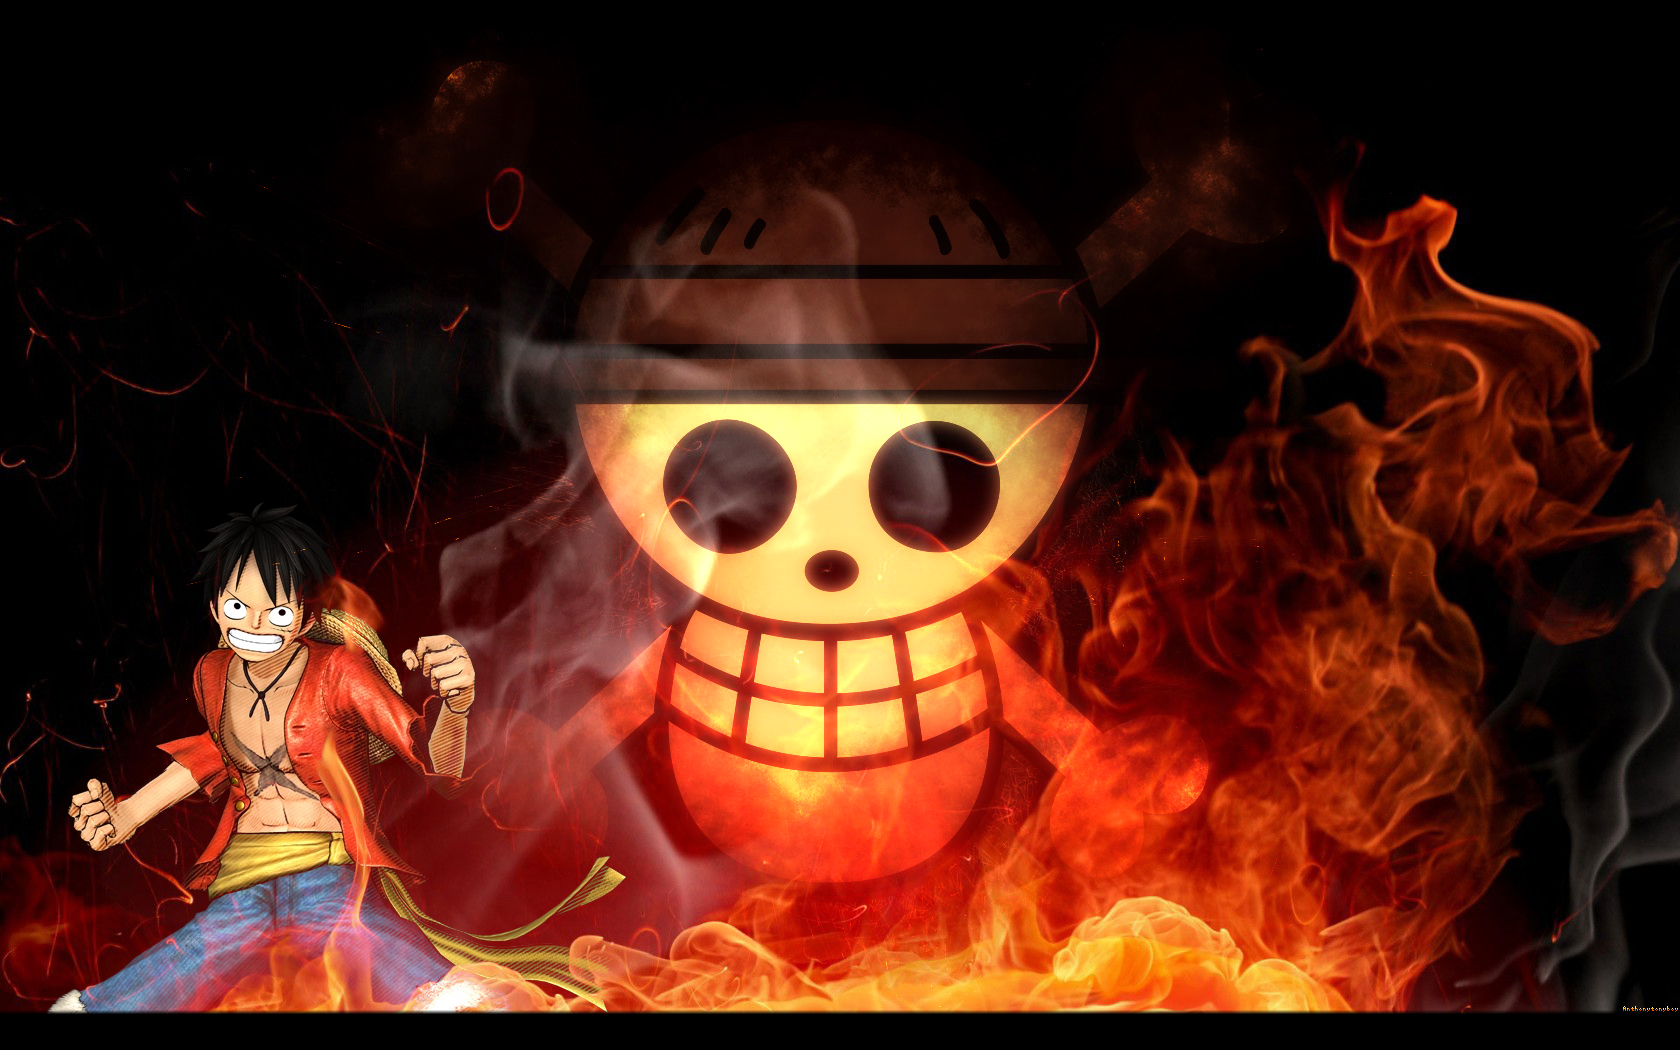 Descarga gratuita de fondo de pantalla para móvil de Fuego, Animado, One Piece, Monkey D Luffy.